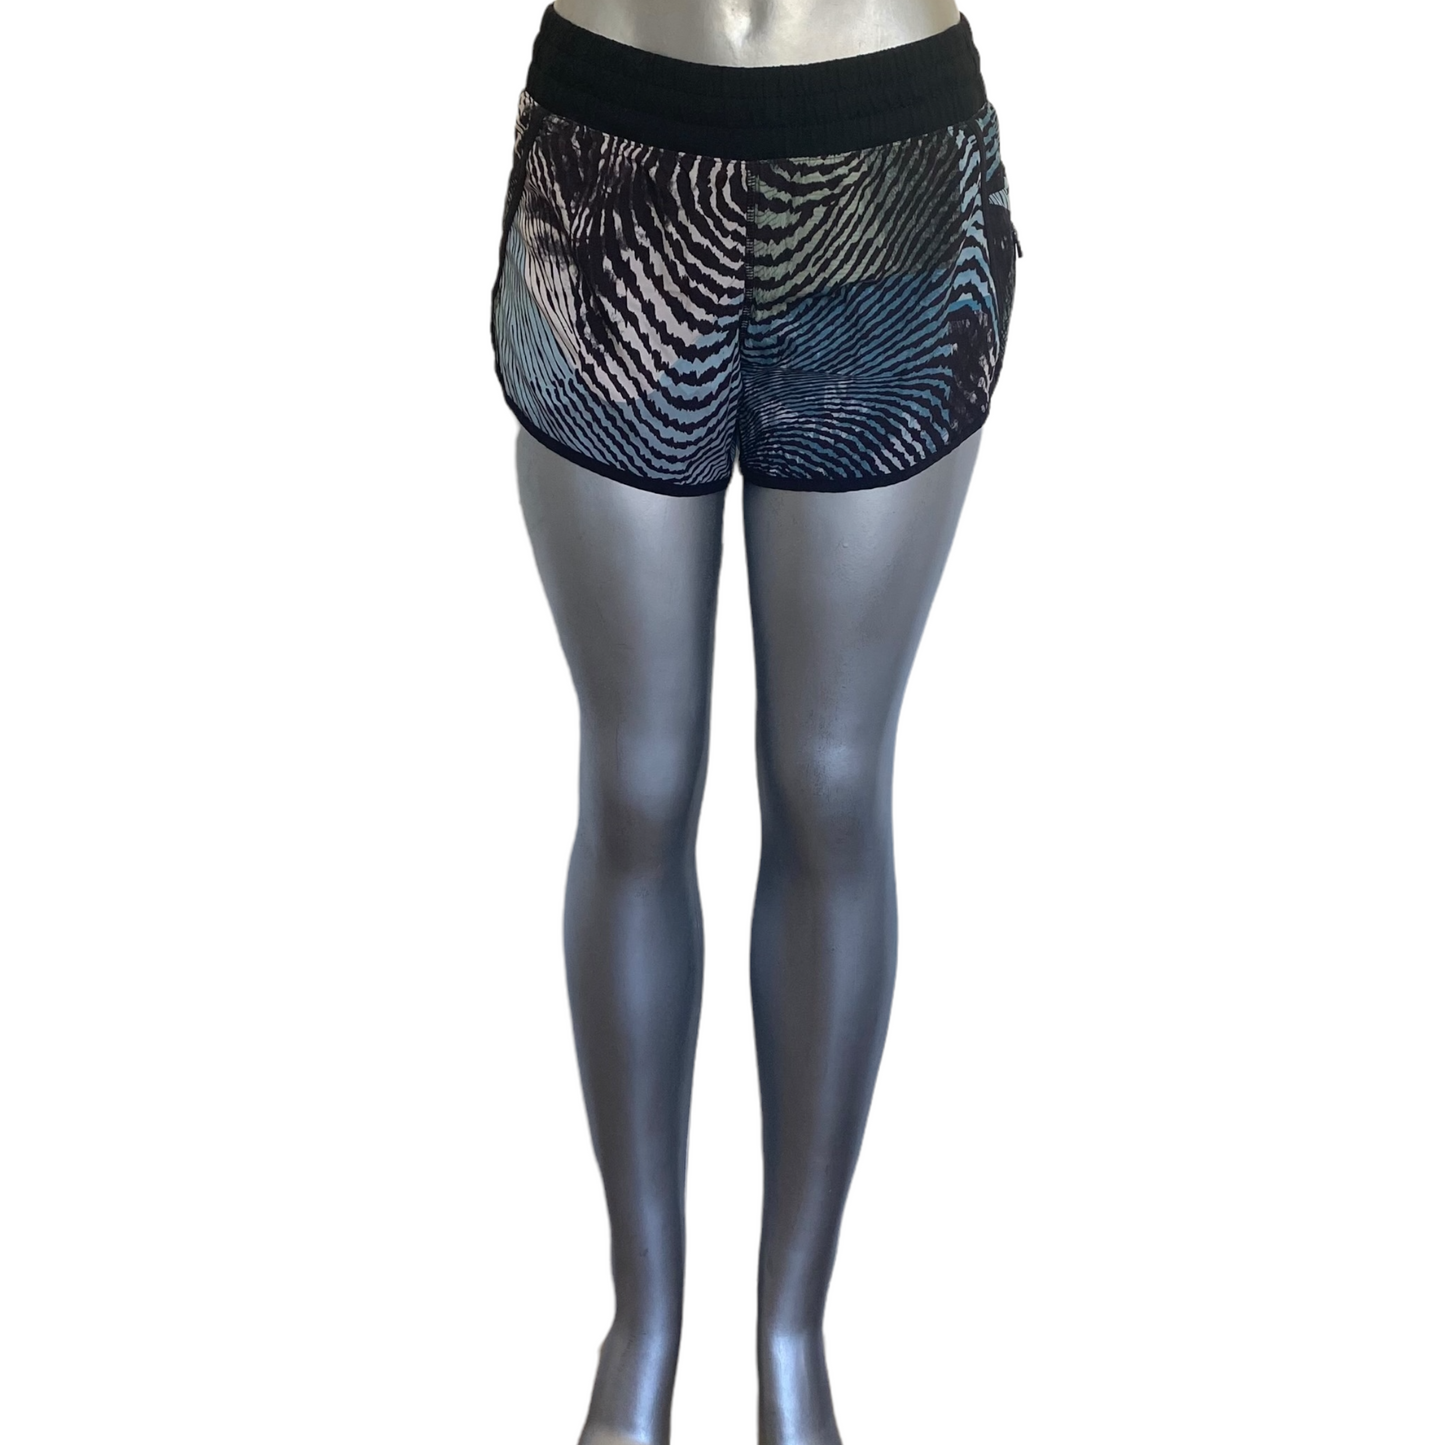 RARE Lululemon Tracker Shorts III 2016 Seawheeze Size 8